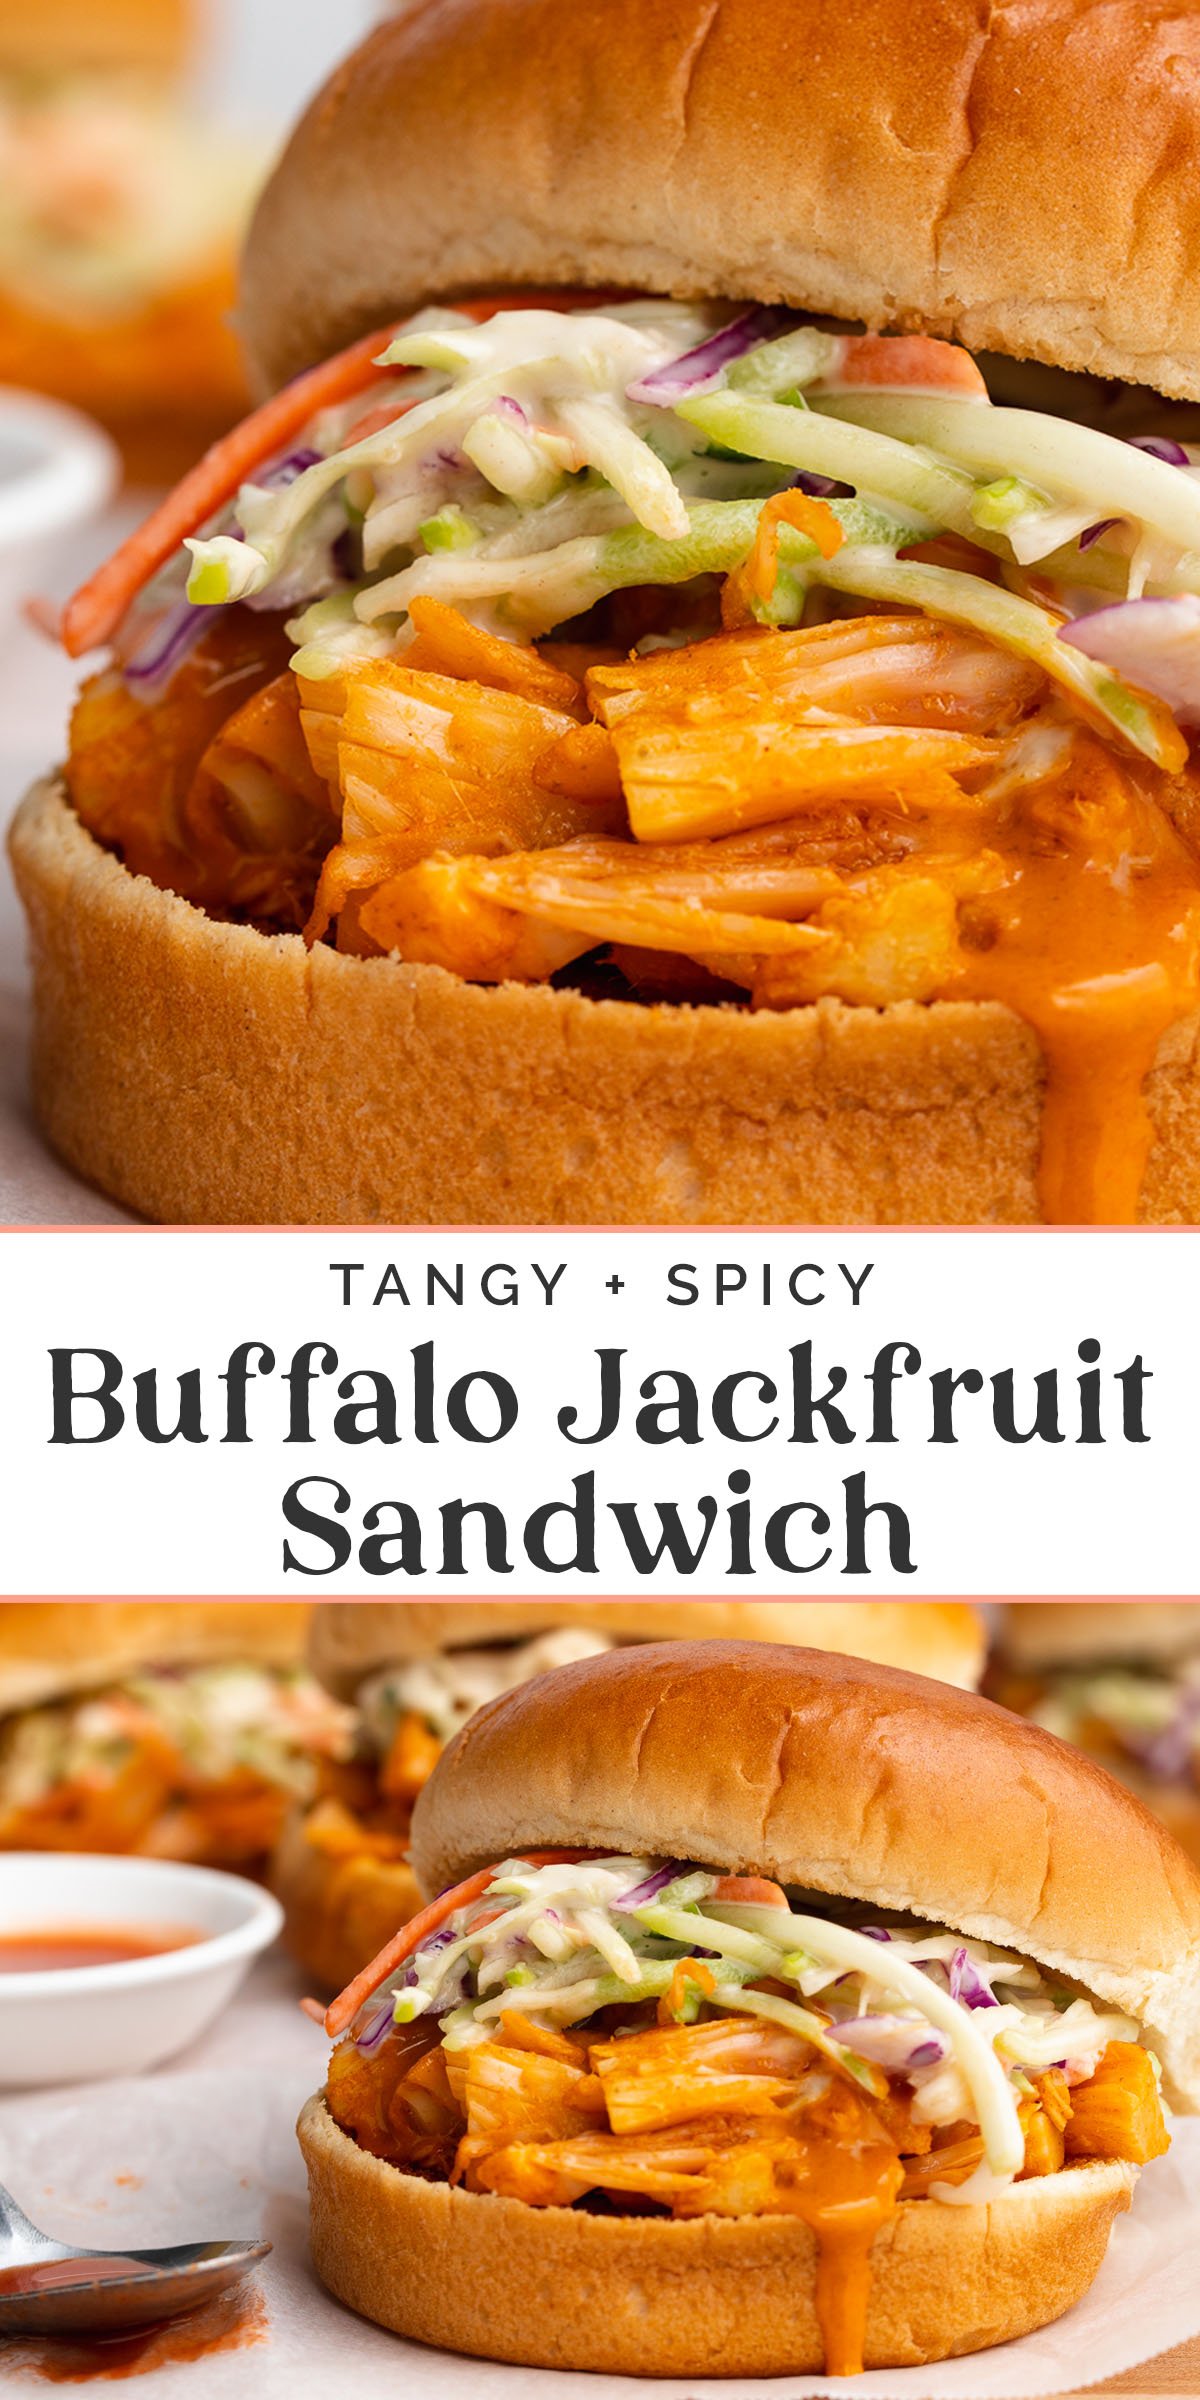 Pin graphic for buffalo jackfruit sandwich.